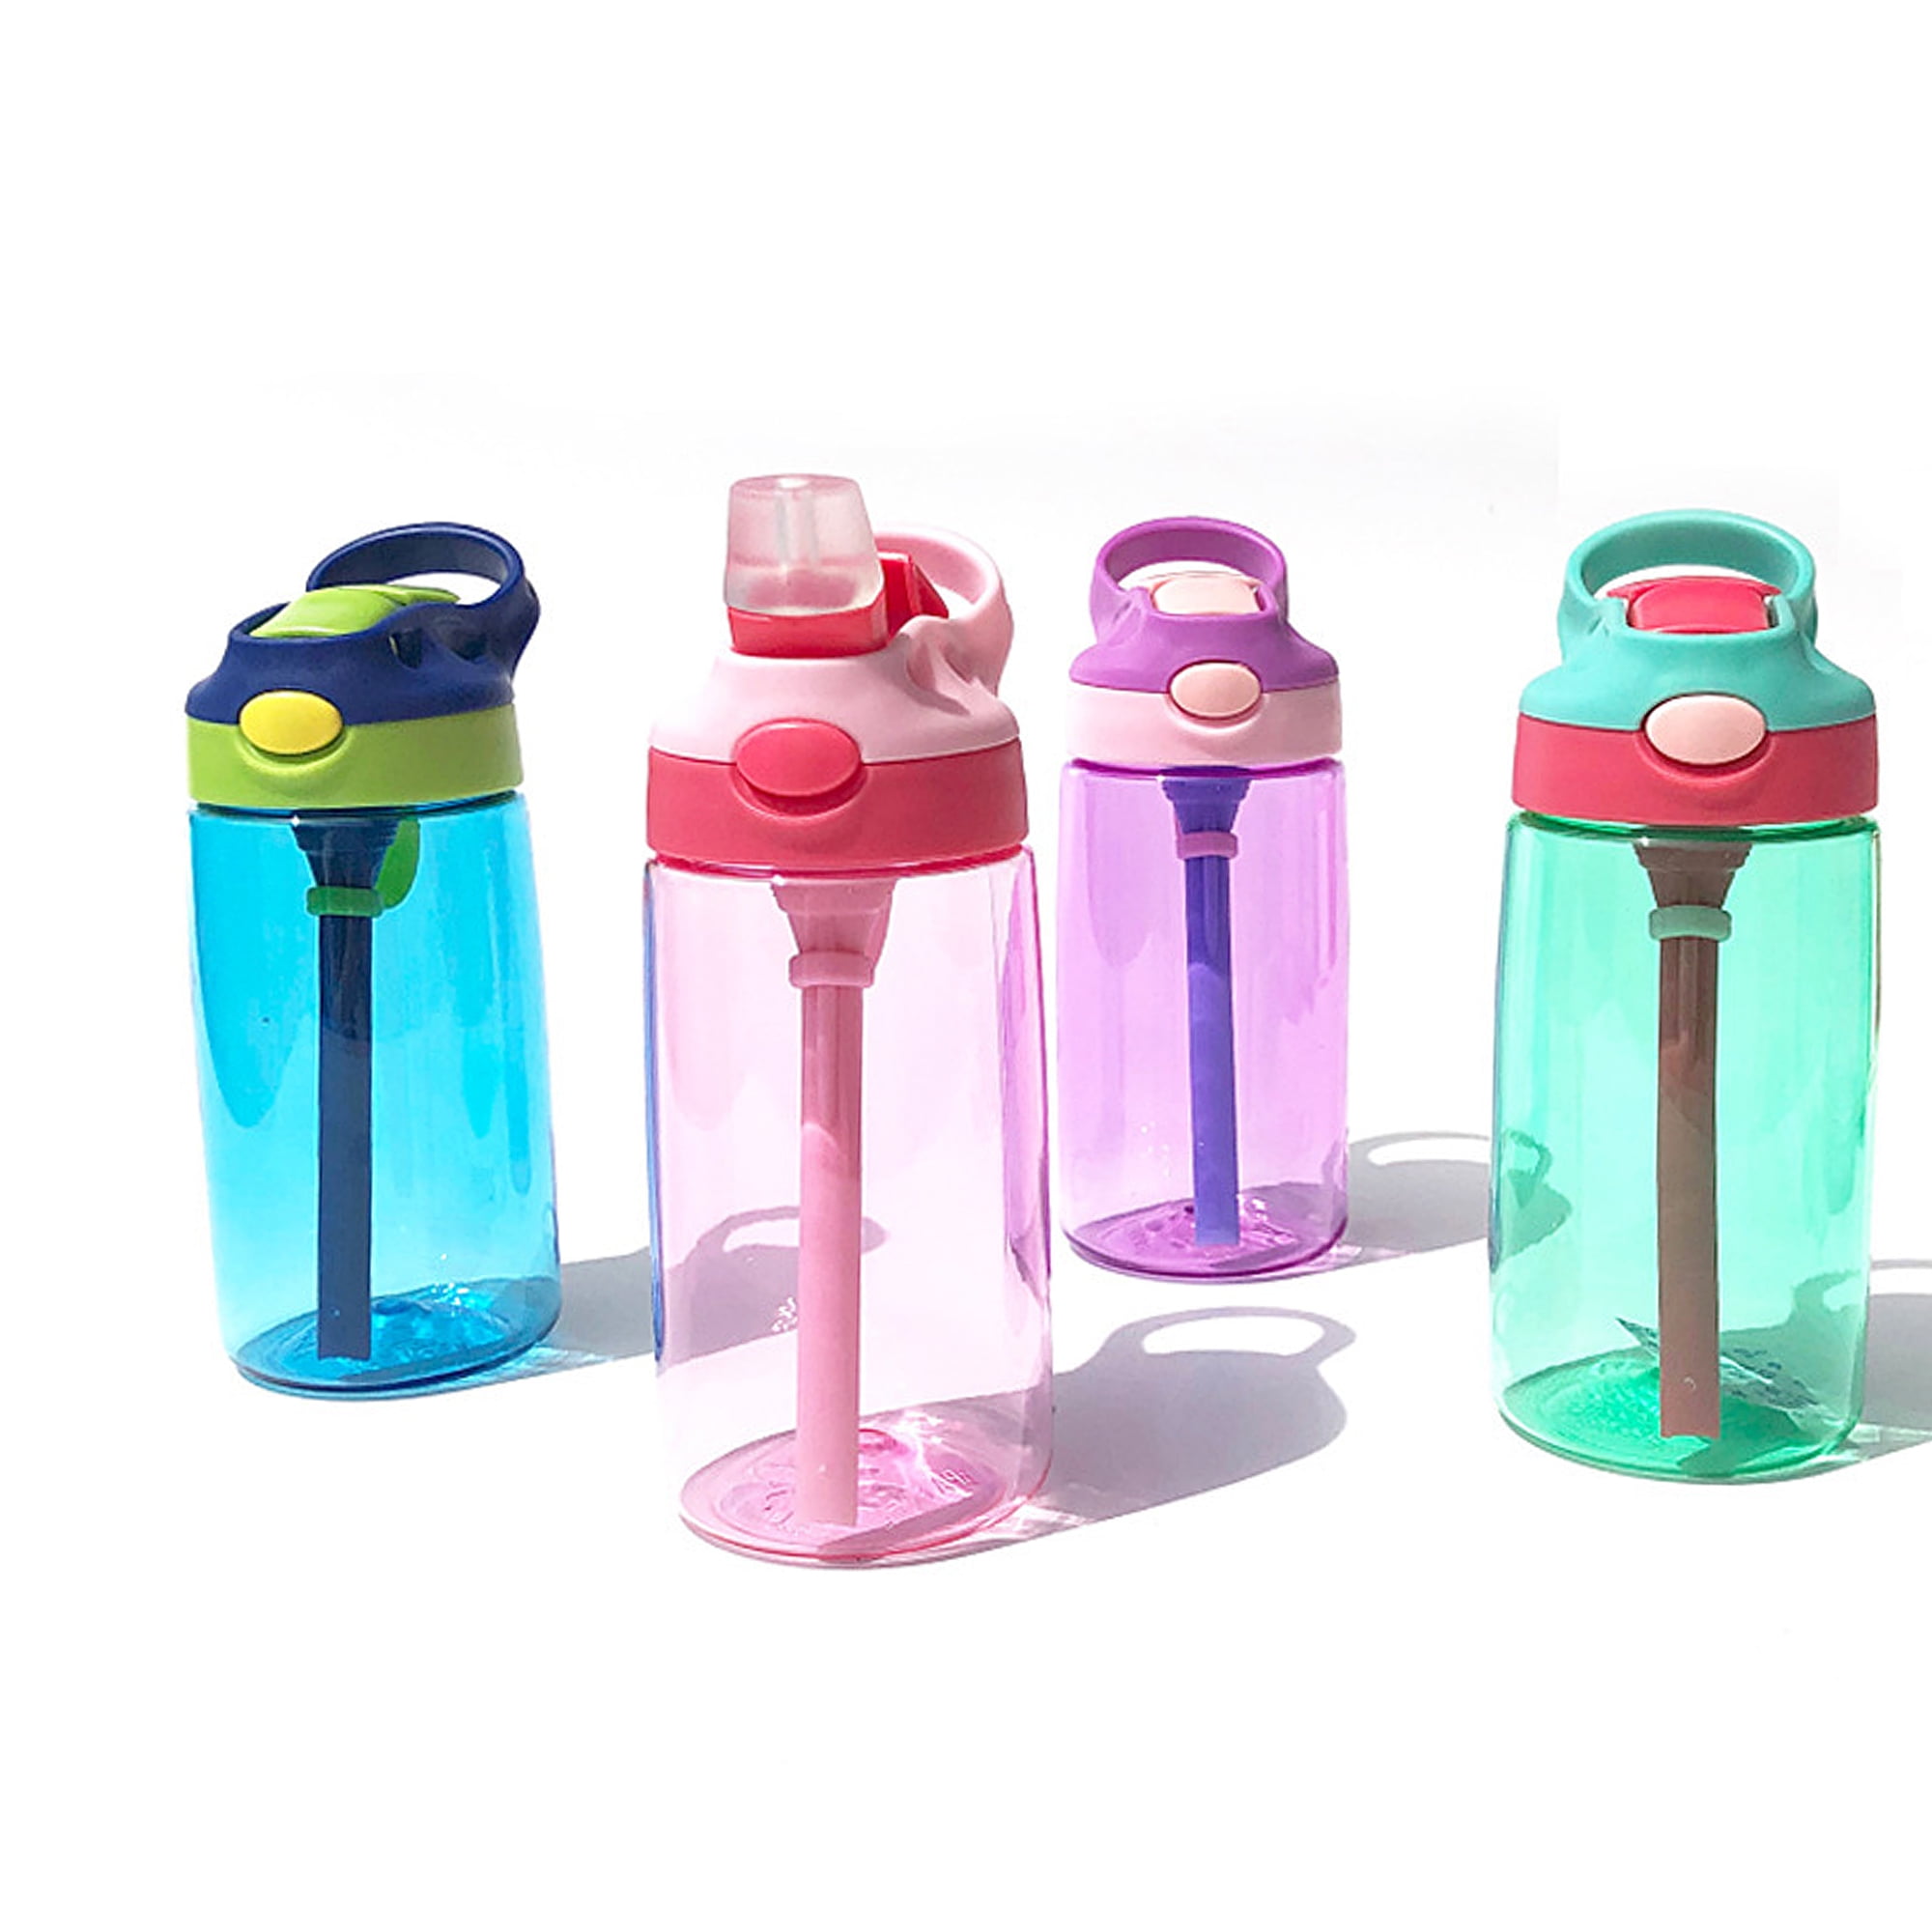 16oz Children Kids Drinking Cup Sports Water Bottle w/ Straws Plastic BPA Free